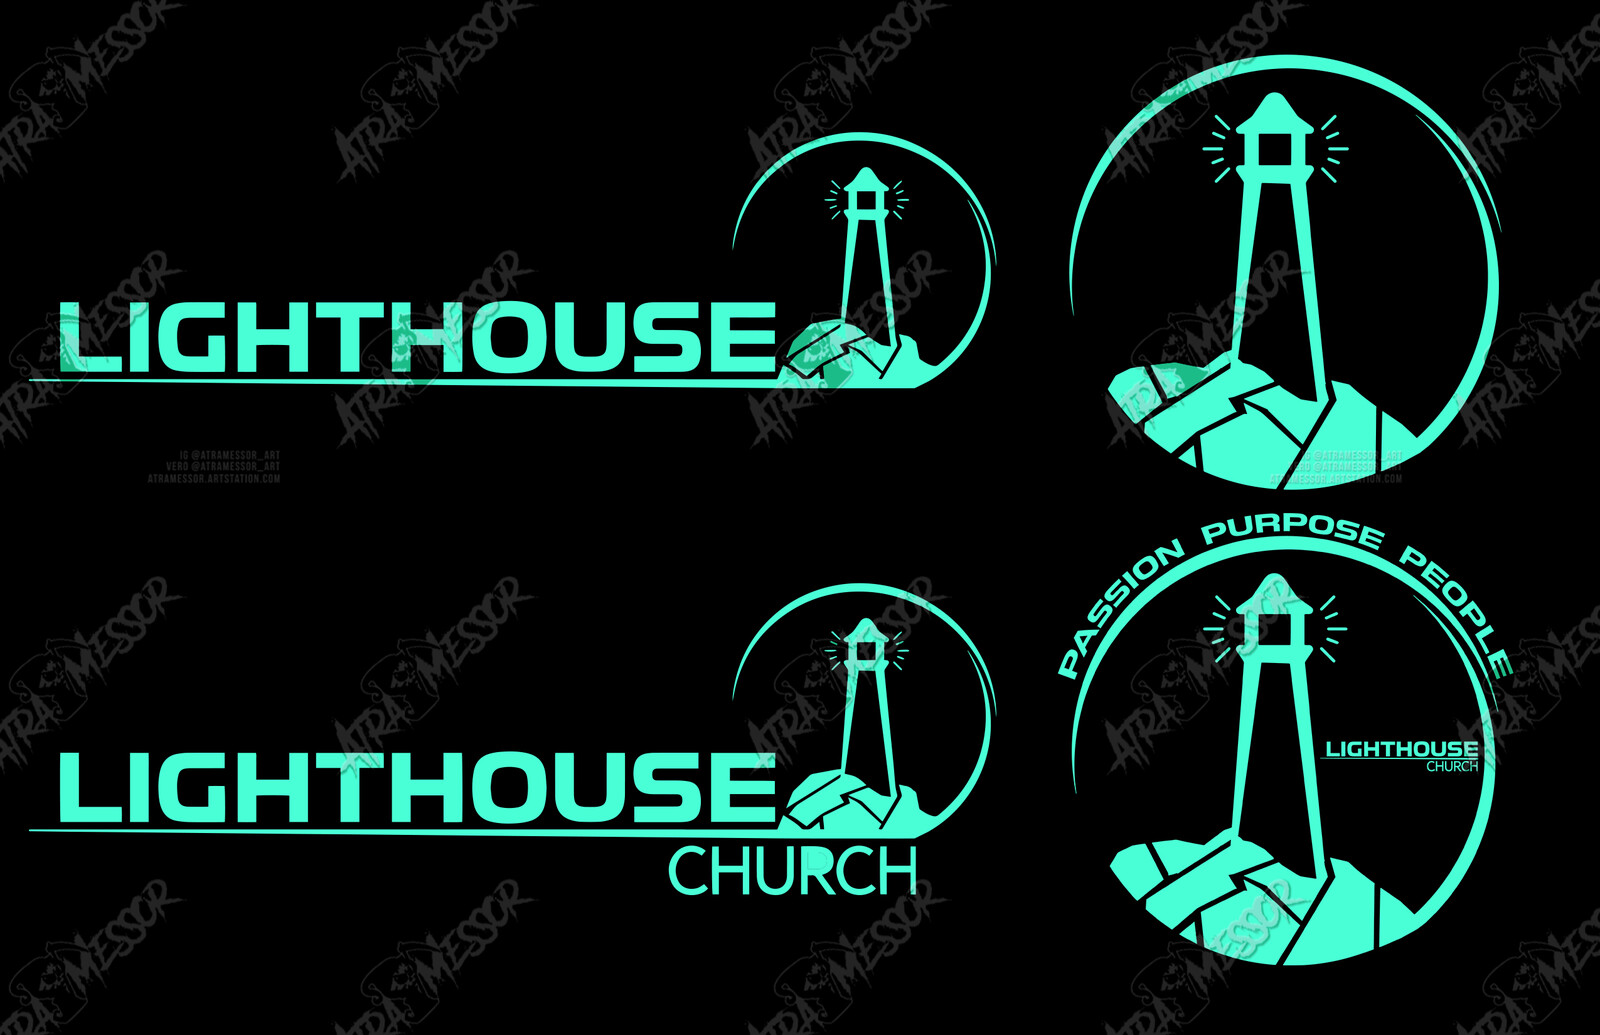 Lighthouse Church Logo
(commission)